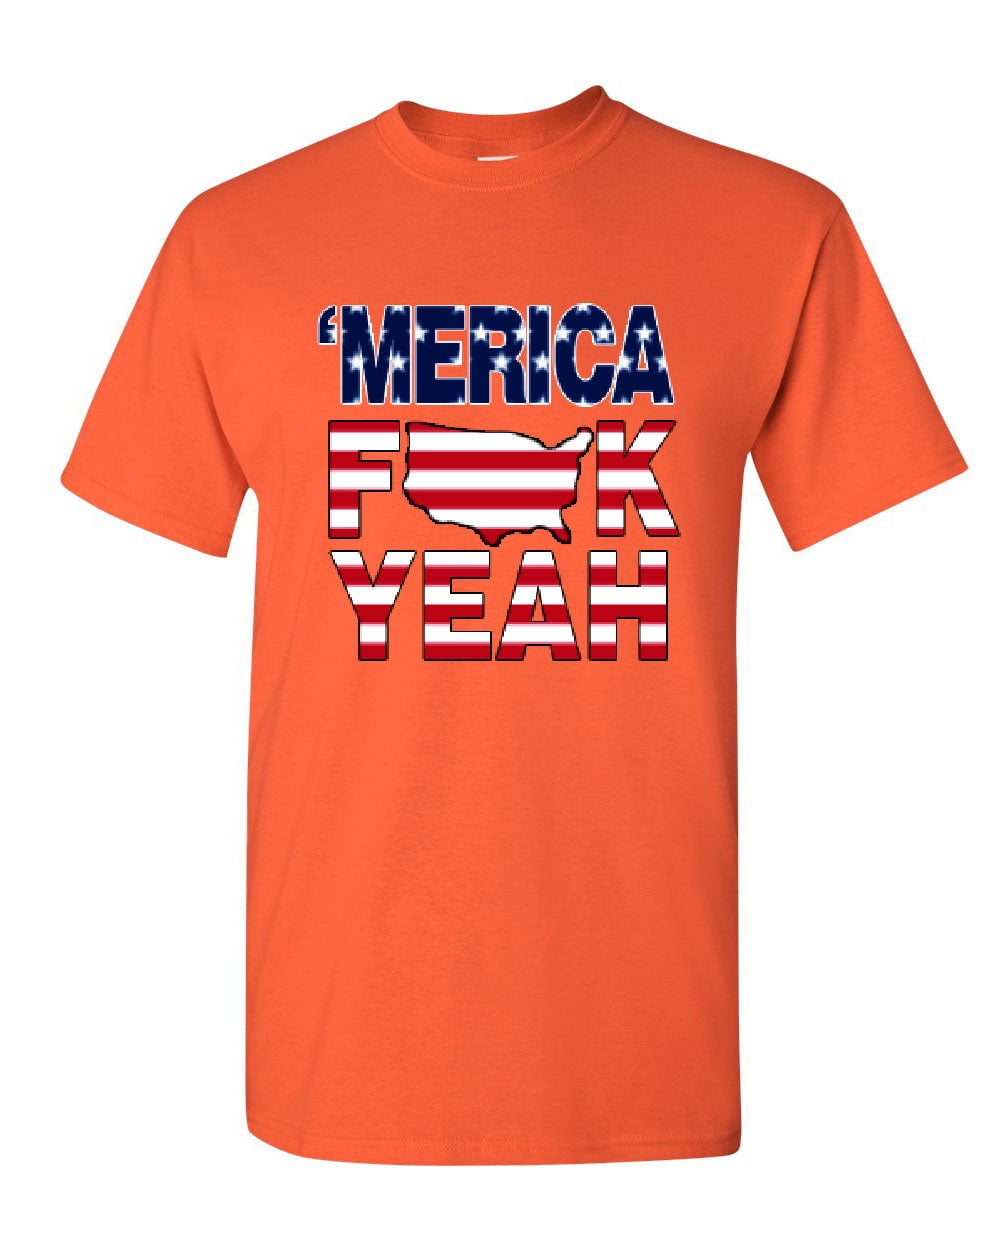 Tee America FCK Yeah T-Shirt July 4 Funny USA Independence Day Men's Novelty Shirt, Orange, Large - Walmart.com